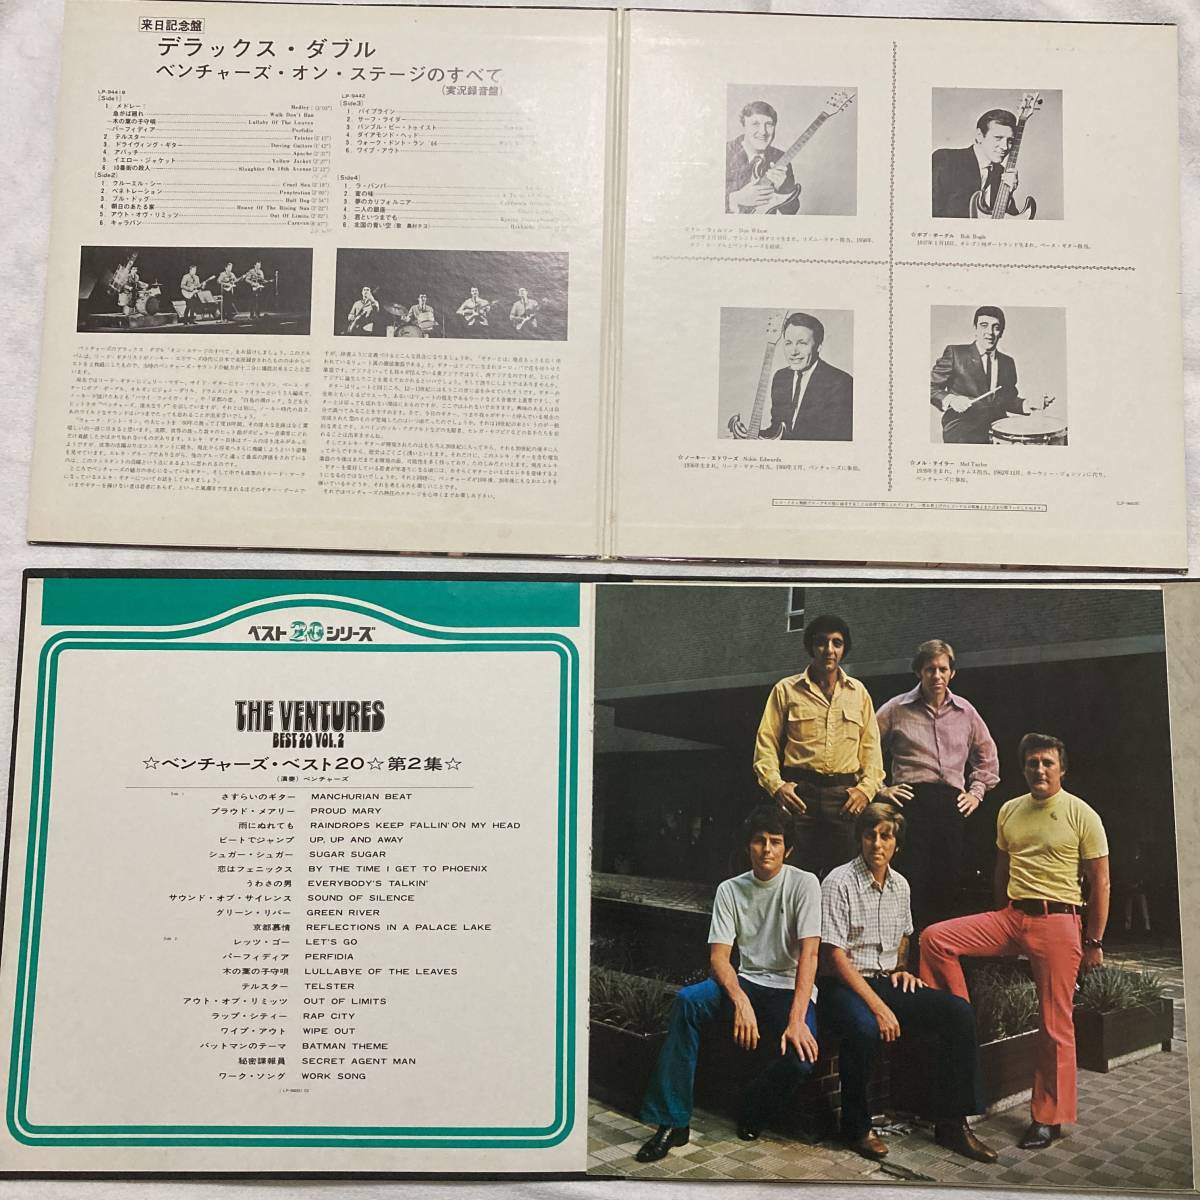 LPレコード THE VENTURES「BEST20 Vol.2」「ON STAGE」2枚セット+おまけ付 ベンチャーズ LP-9441B LP-99025